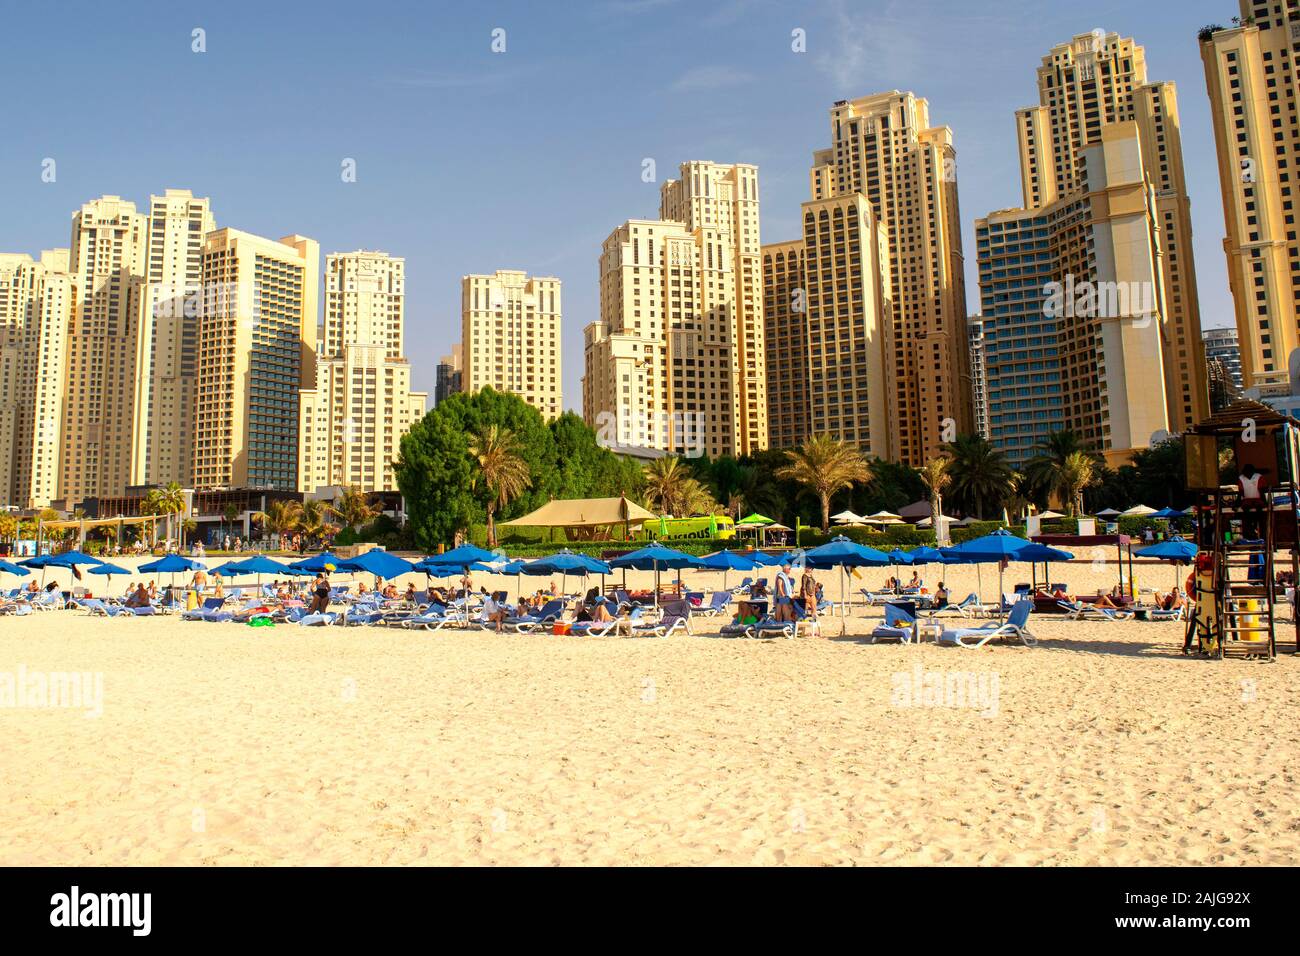 Dubai / UAE - November 7, 2019: JBR. Beautiful view of Jumeirah Beach Residence skyscrapers. Urban beach in the Middle East. Blue sunbeds. Stock Photo